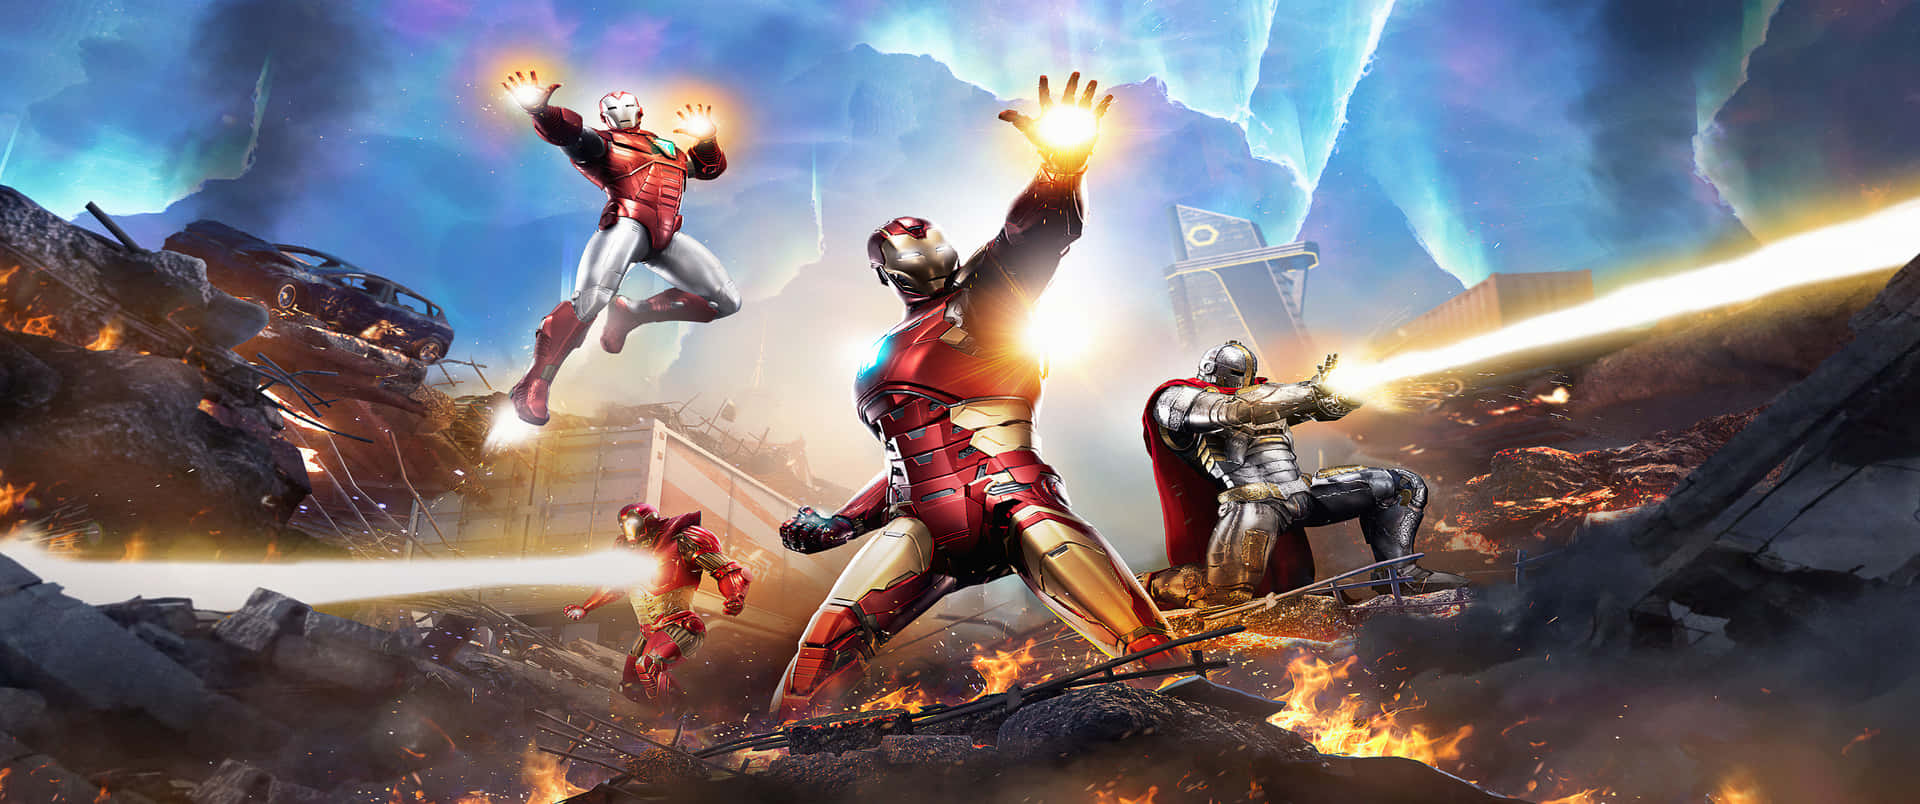 "Avengers Assemble": Get Ready to Witness Marvel's Epic Battle Wallpaper